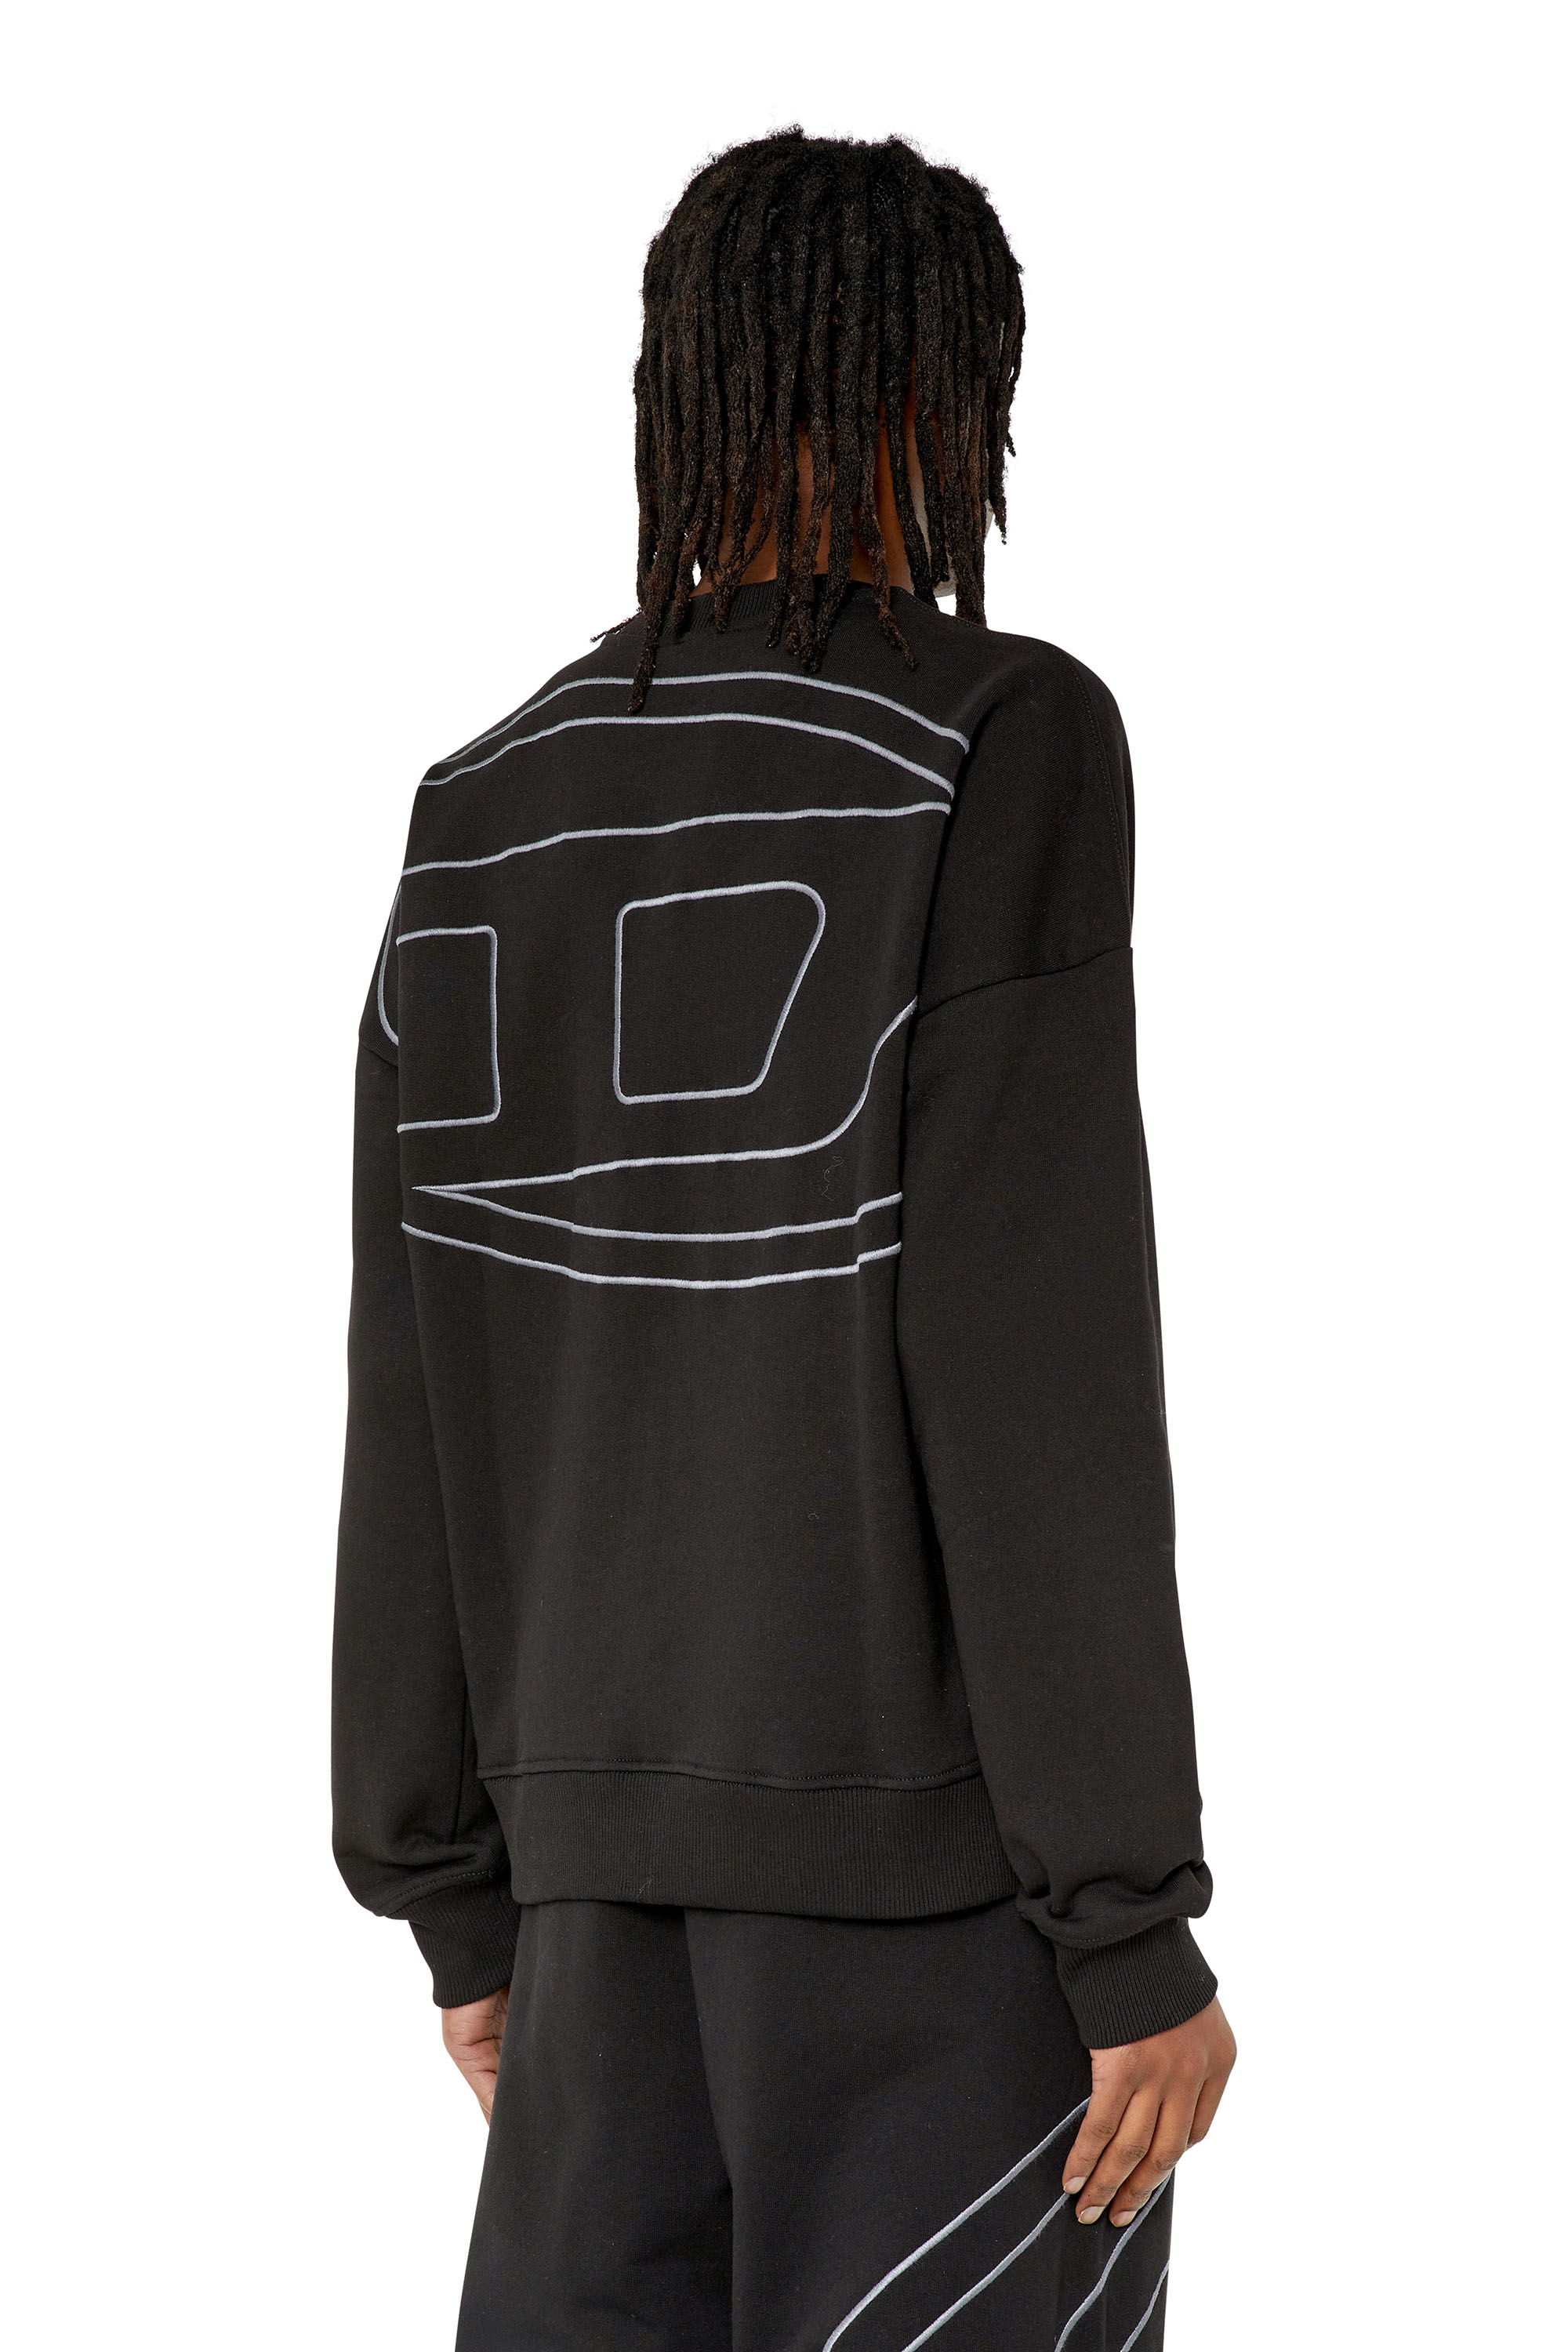 Diesel Sweatshirt With Back Maxi D Logo In Black